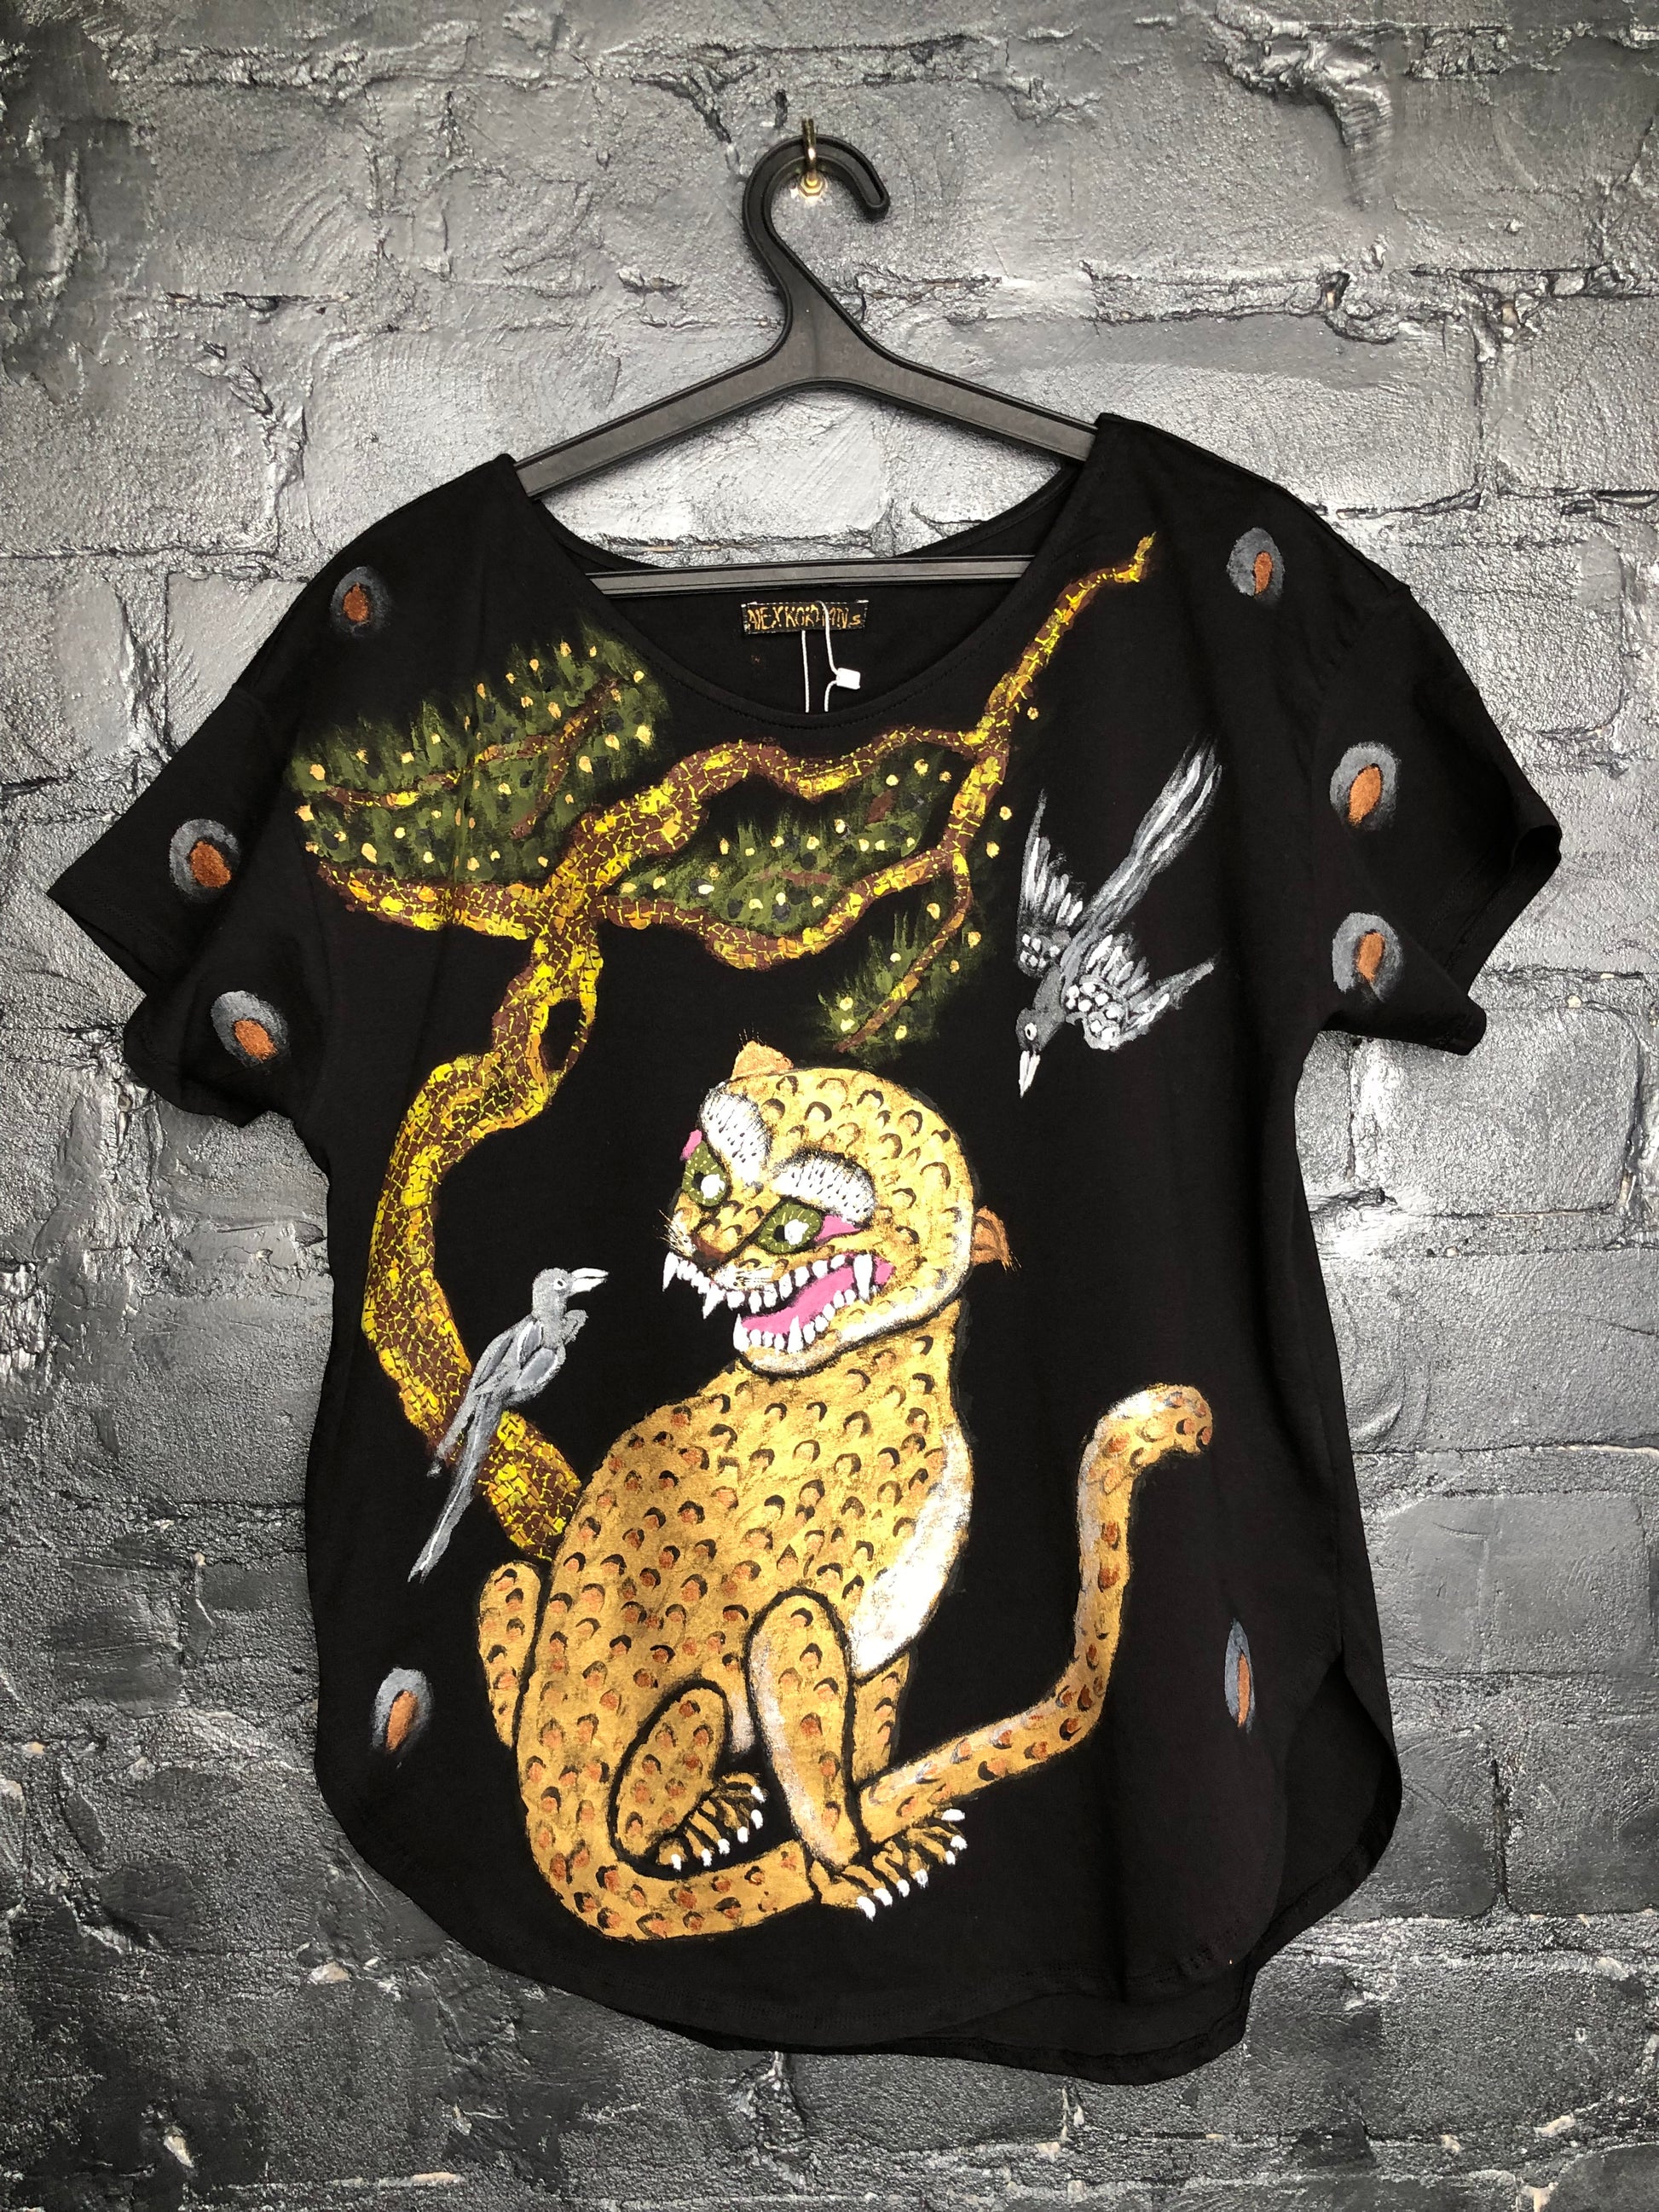 The best women's clothing leopard t-shirt